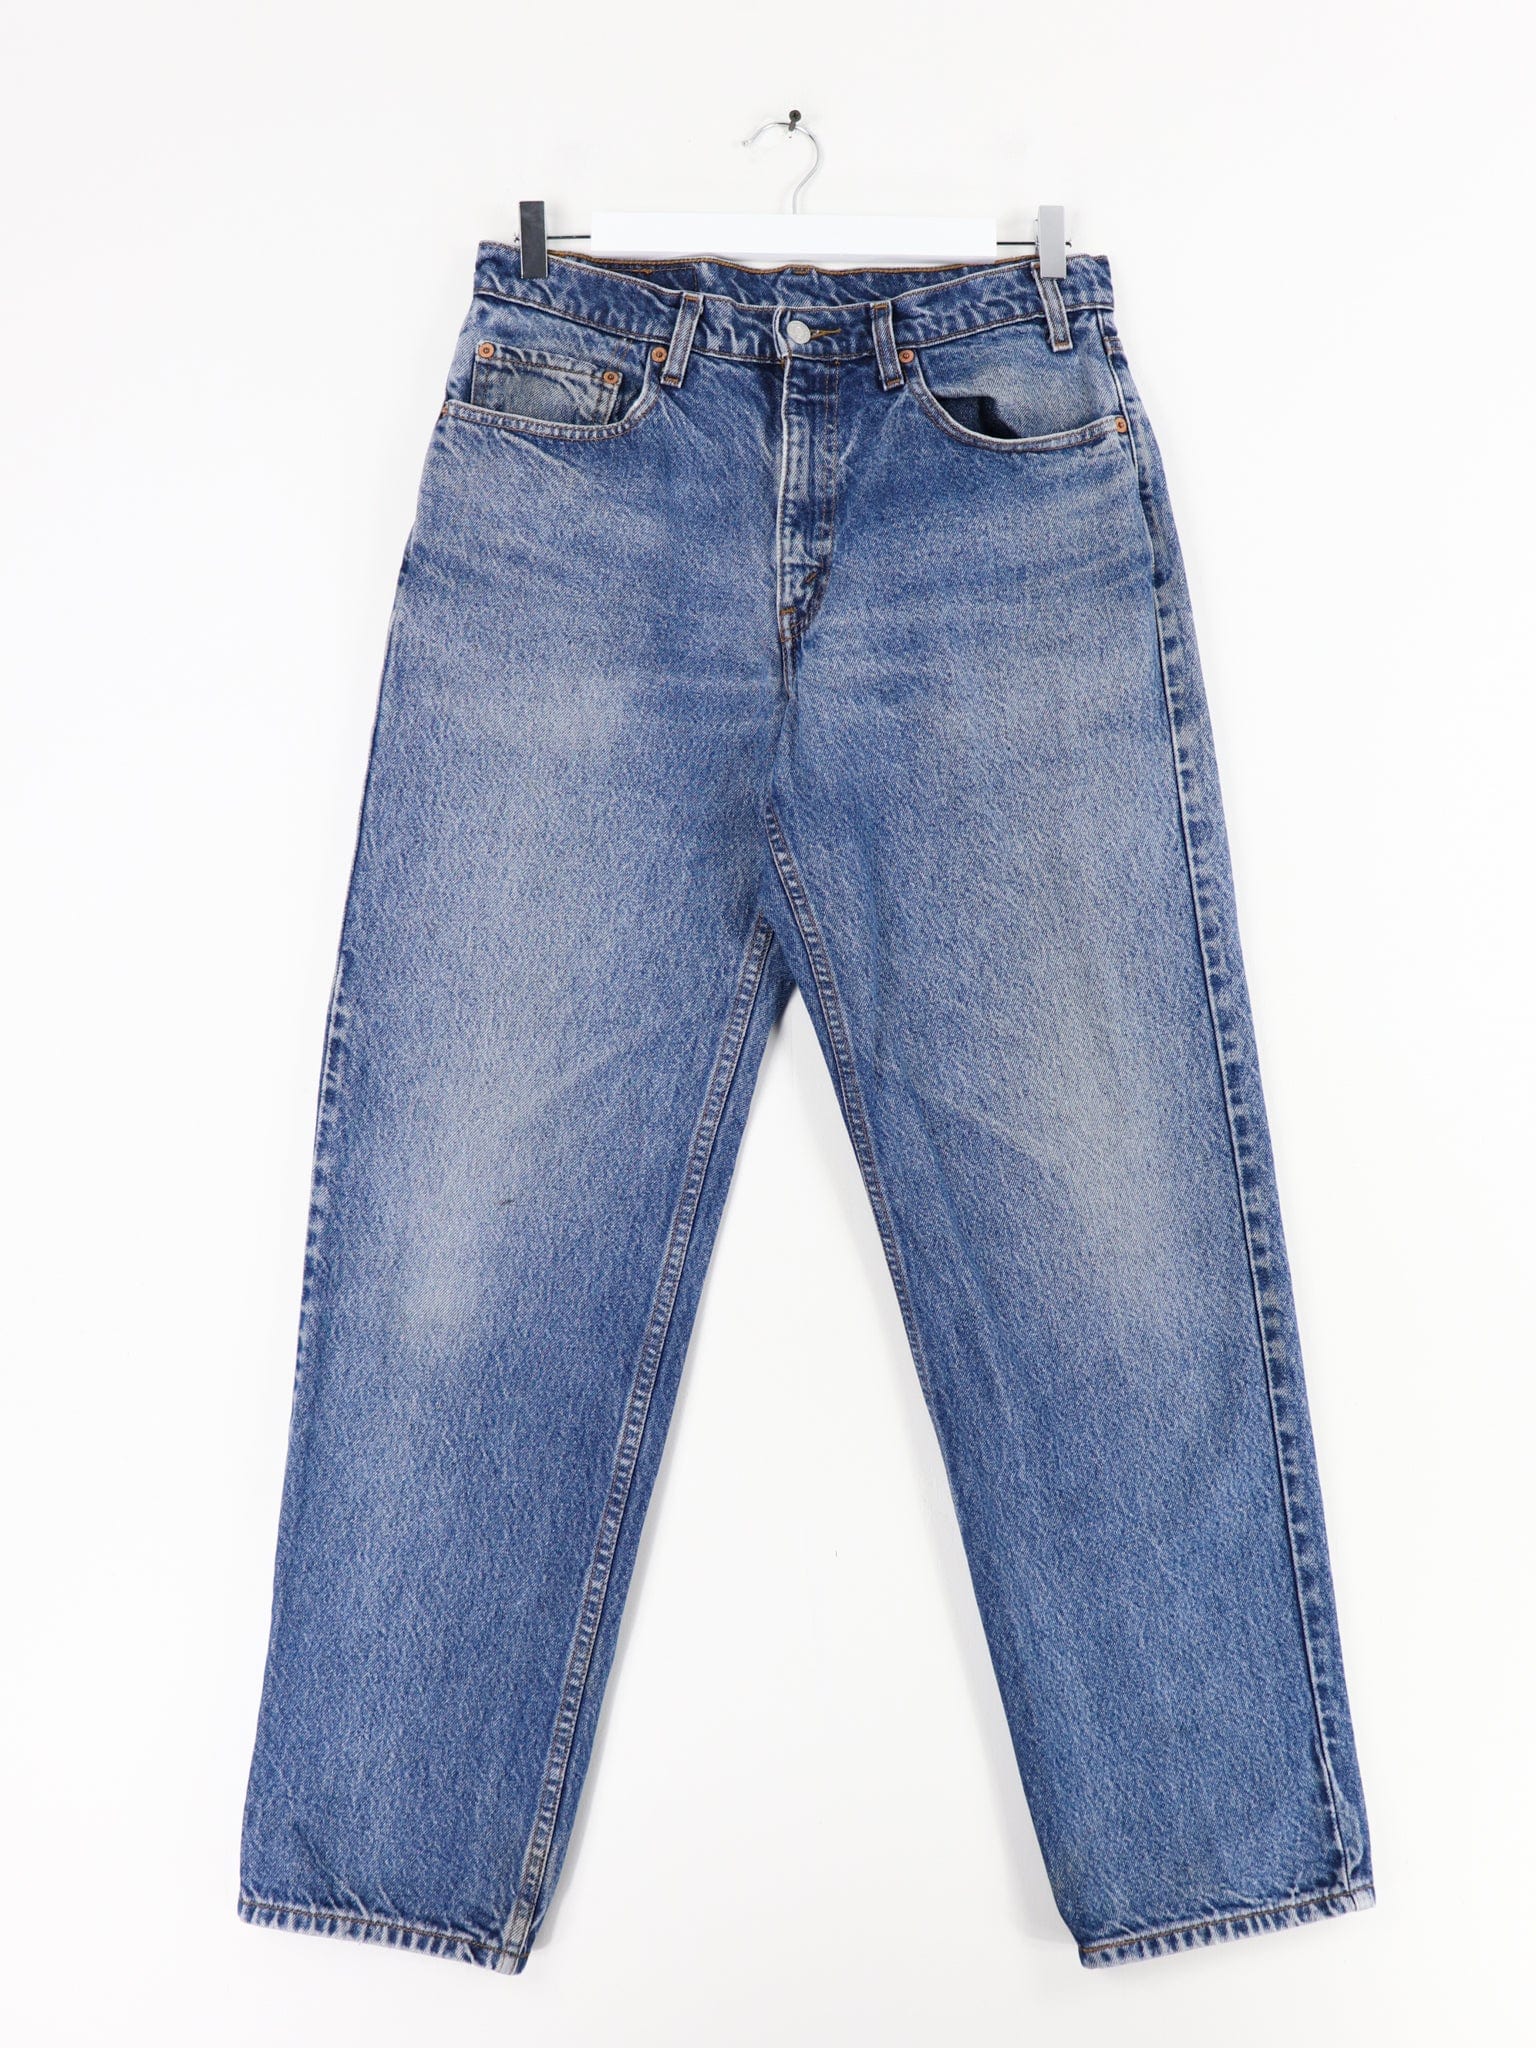 Vintage Levi's 550 Relaxed Fit Denim Jeans Size 33 x 32